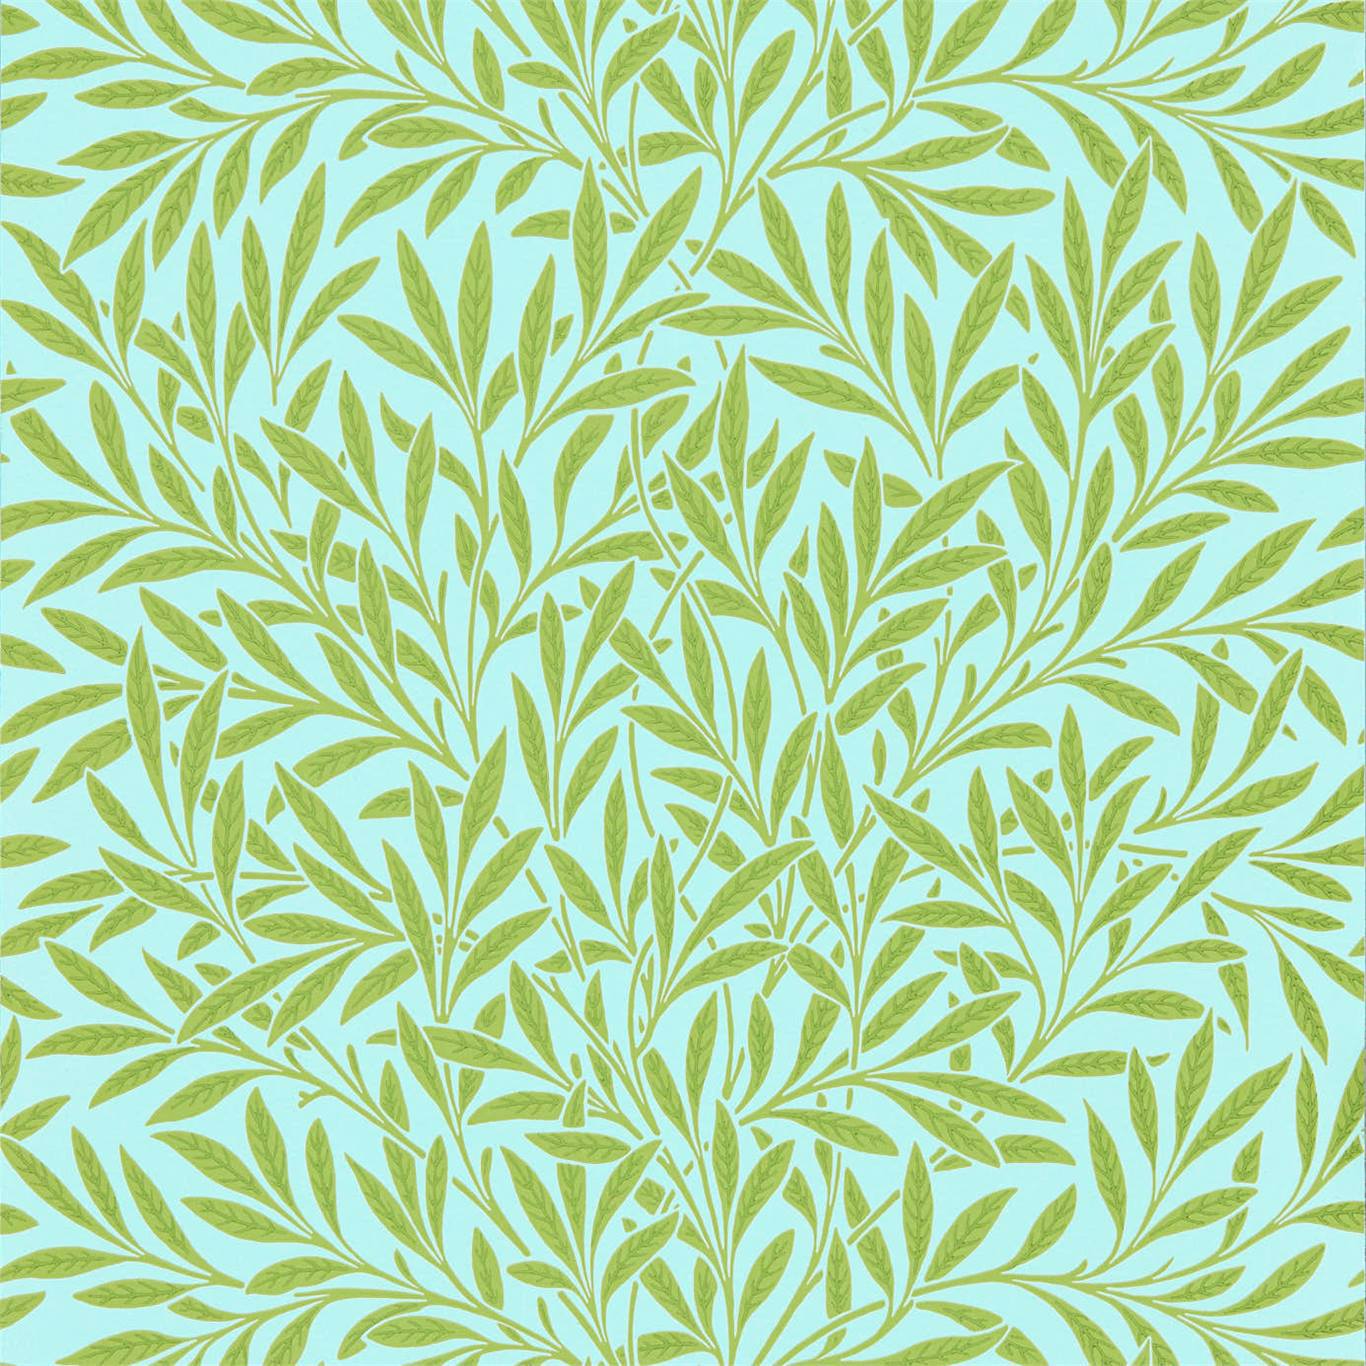 Willow Sky/Leaf Wallpaper DBPW216964 by Morris & Co